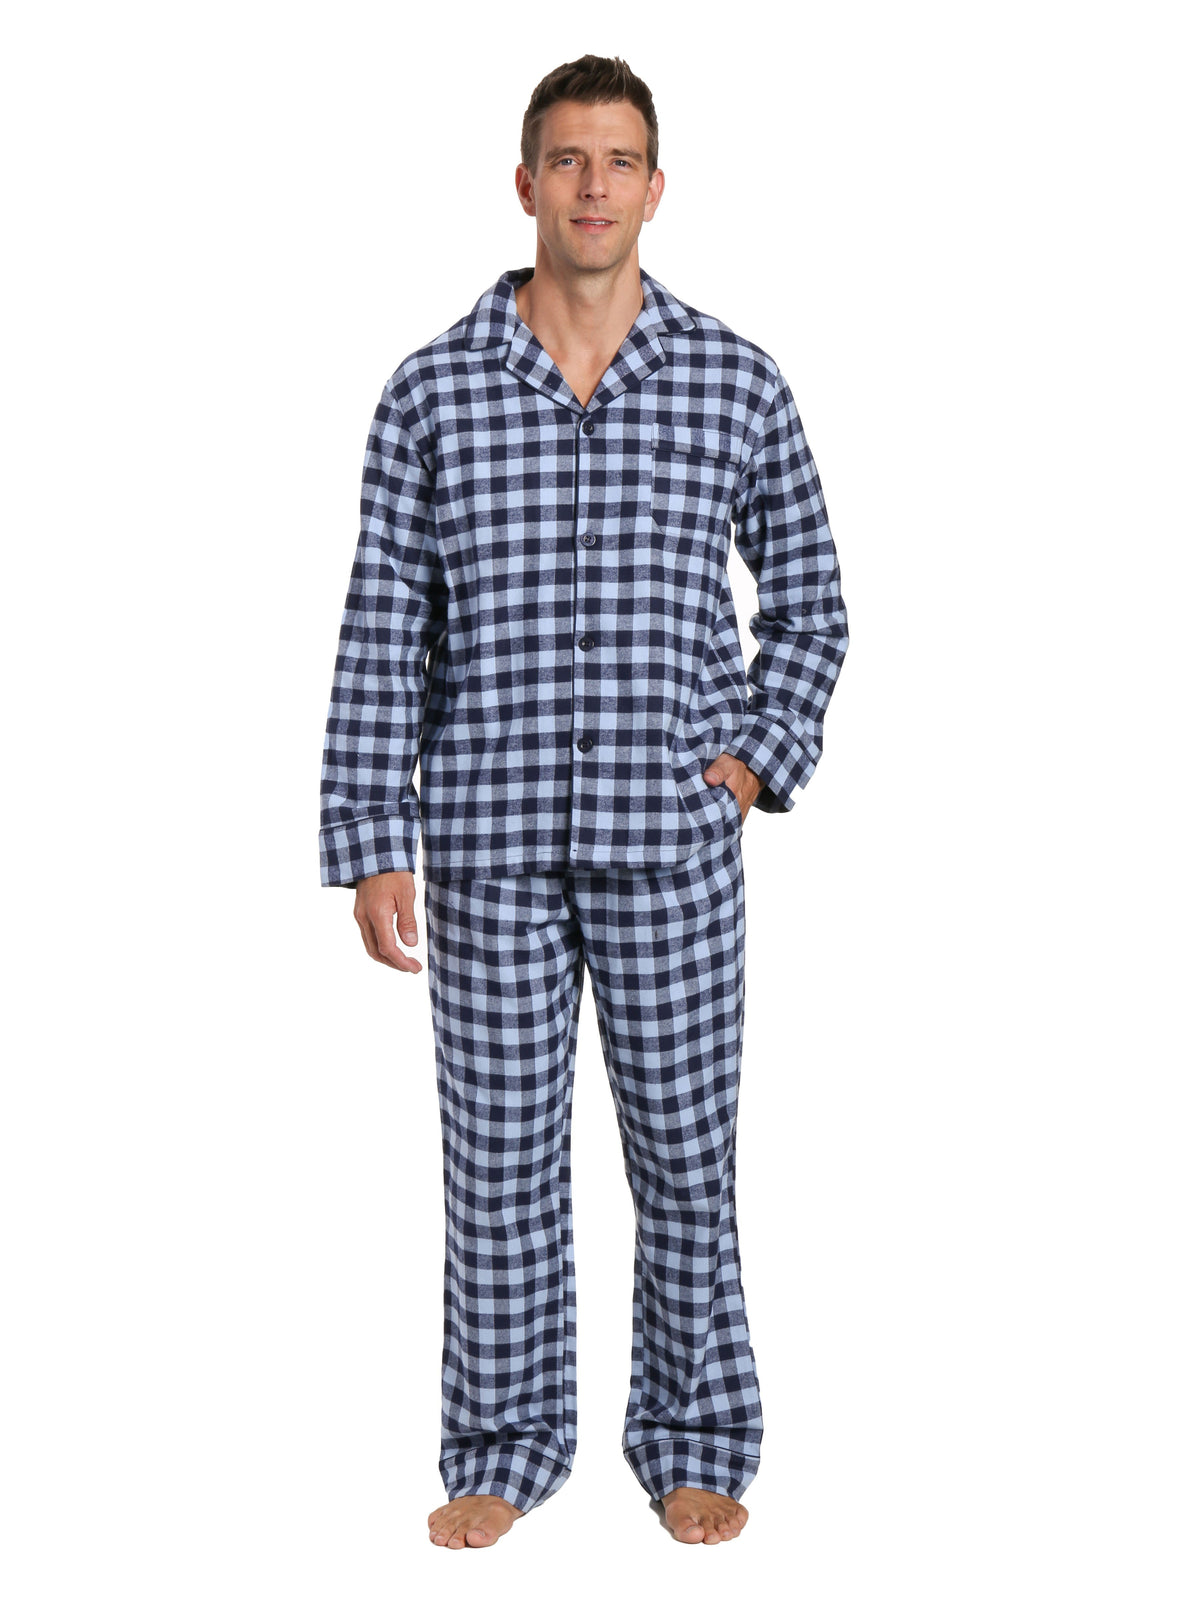 Box Packaged Men's Premium 100% Cotton Flannel Pajama Sleepwear Set - Gingham Checks Navy Blue